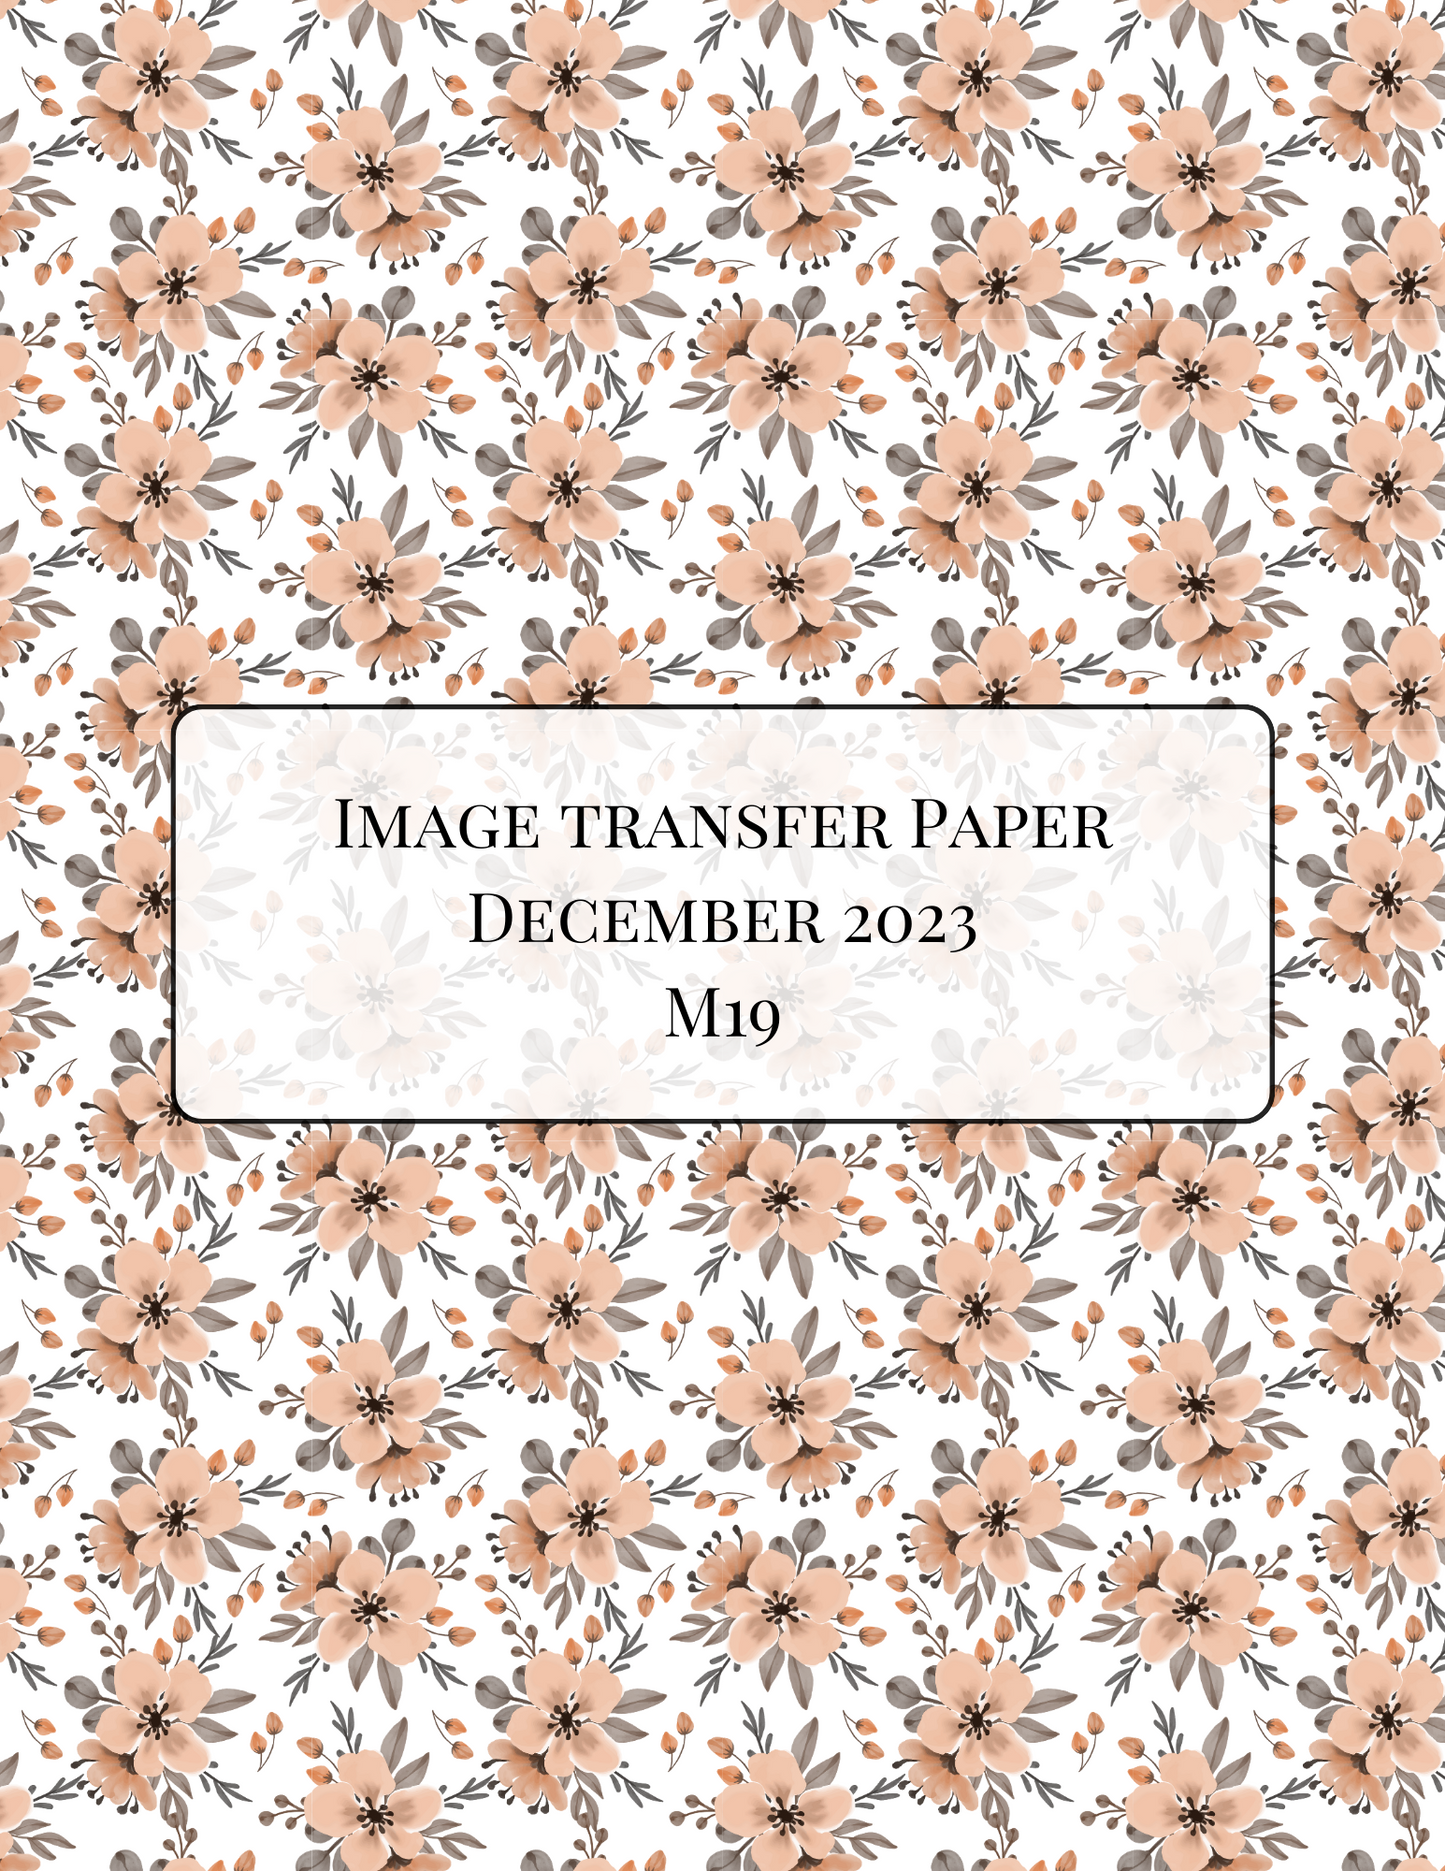 M19 Transfer Paper - December 2023 Launch